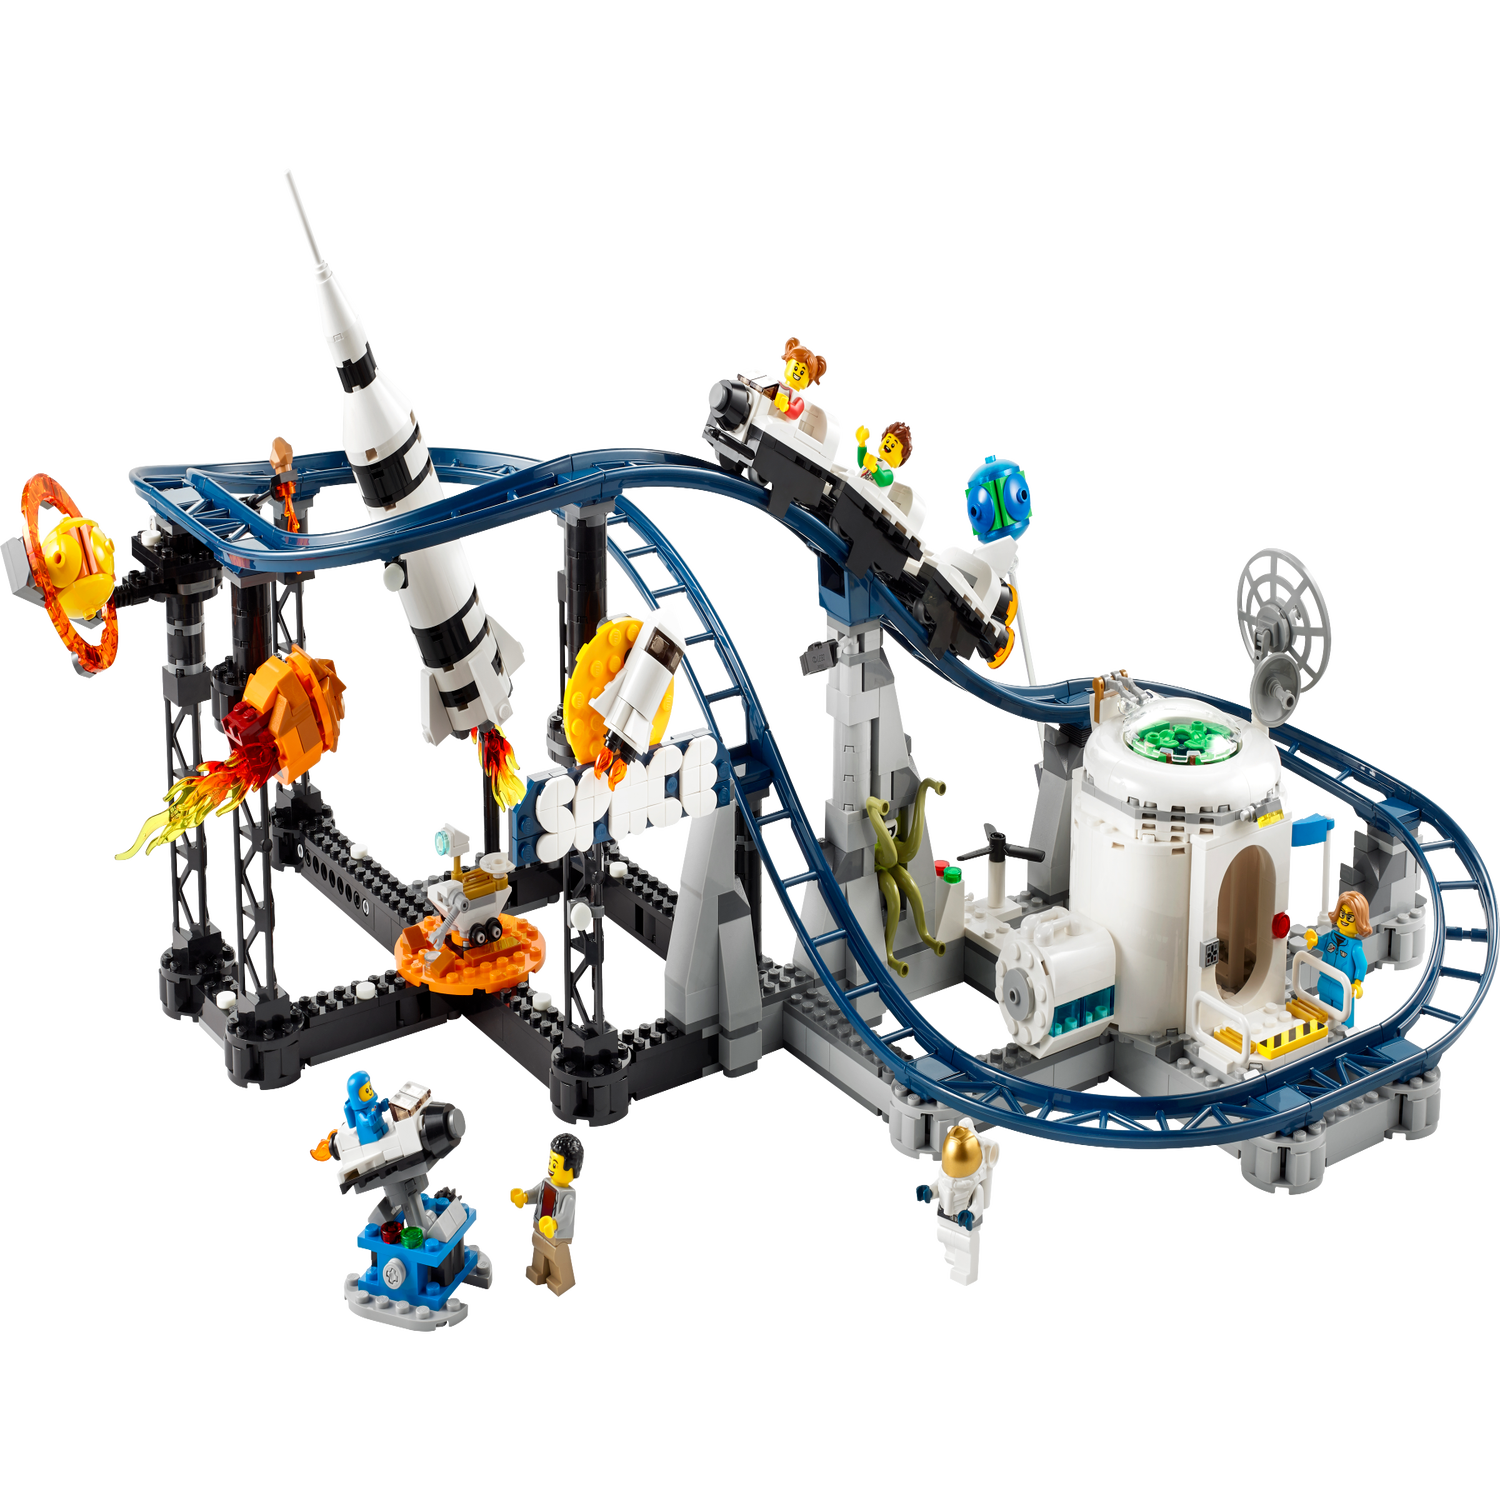 LEGO IDEAS - The Drop Coaster